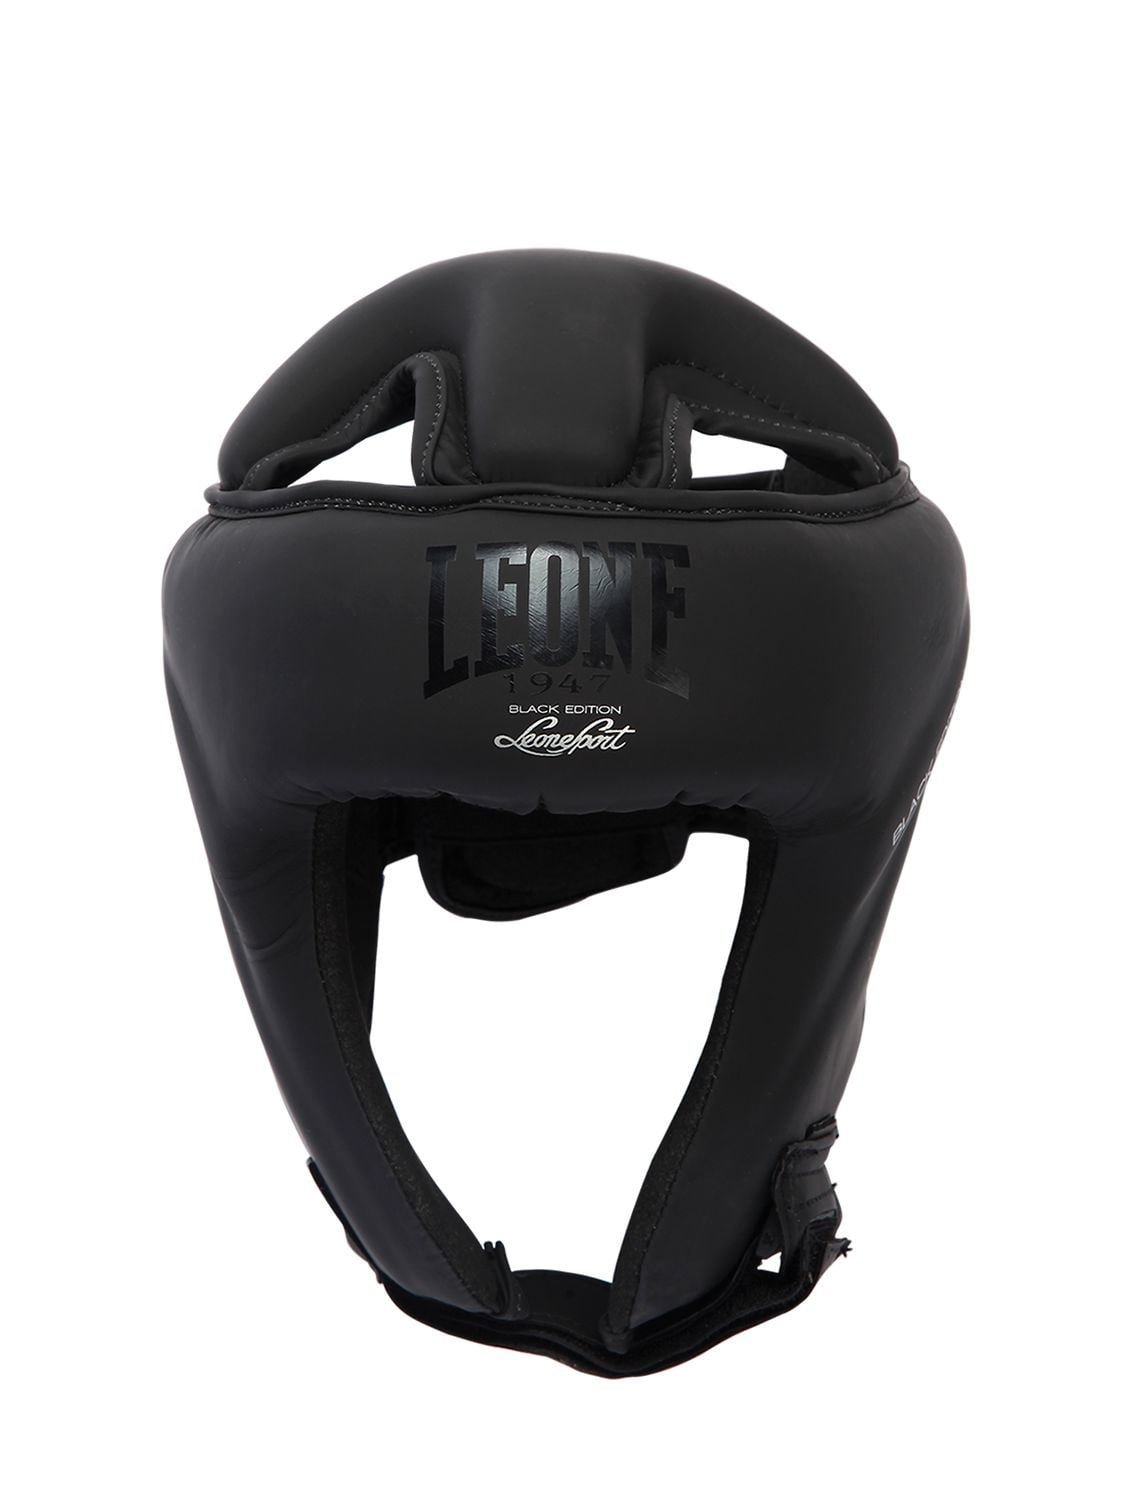 Leone Black Edition Boxing Helmet